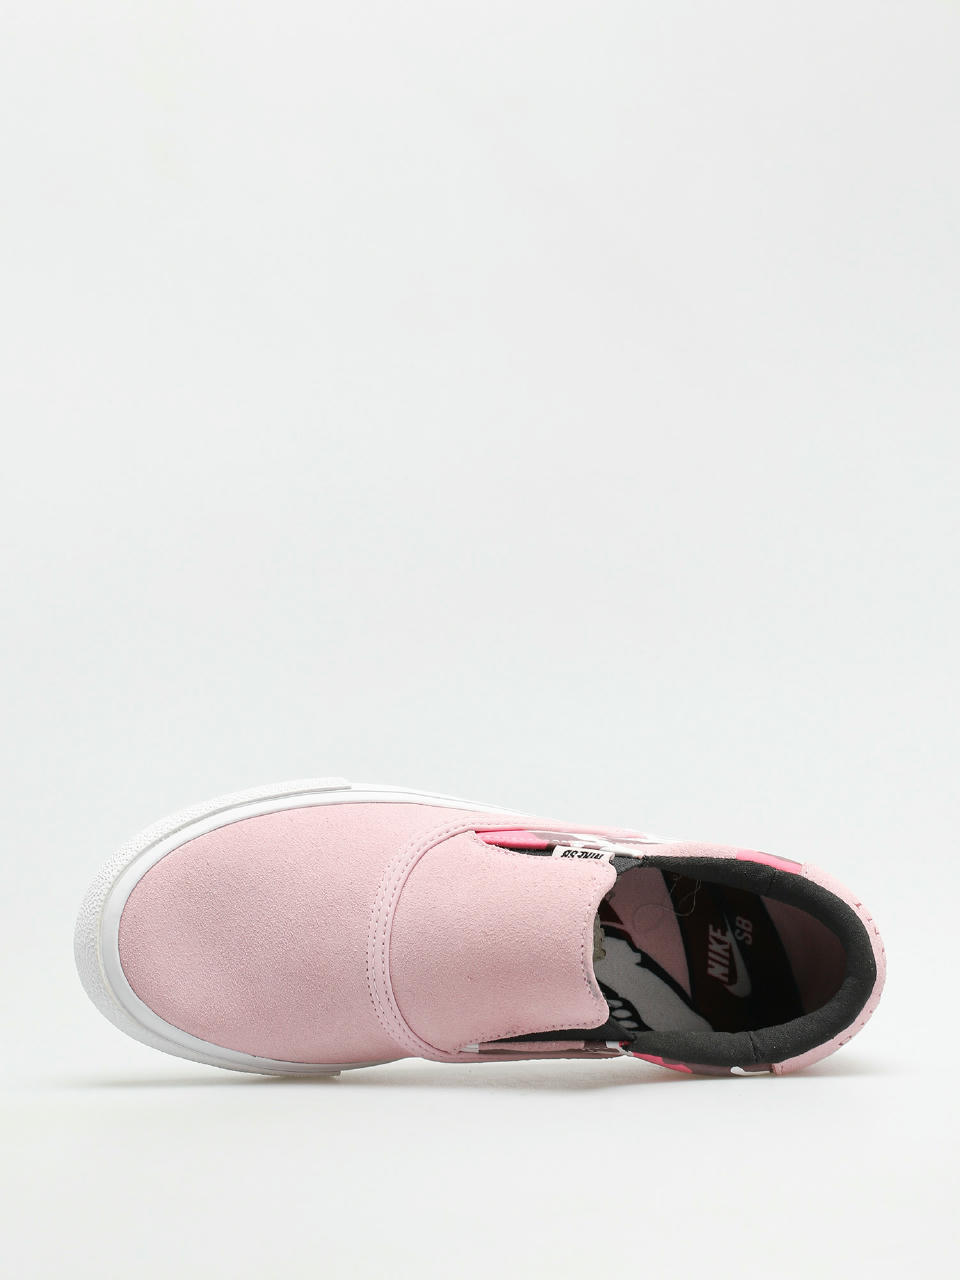 Nike SB Zoom Verona Slip X Leticia Bufoni Shoes (prism pink/team